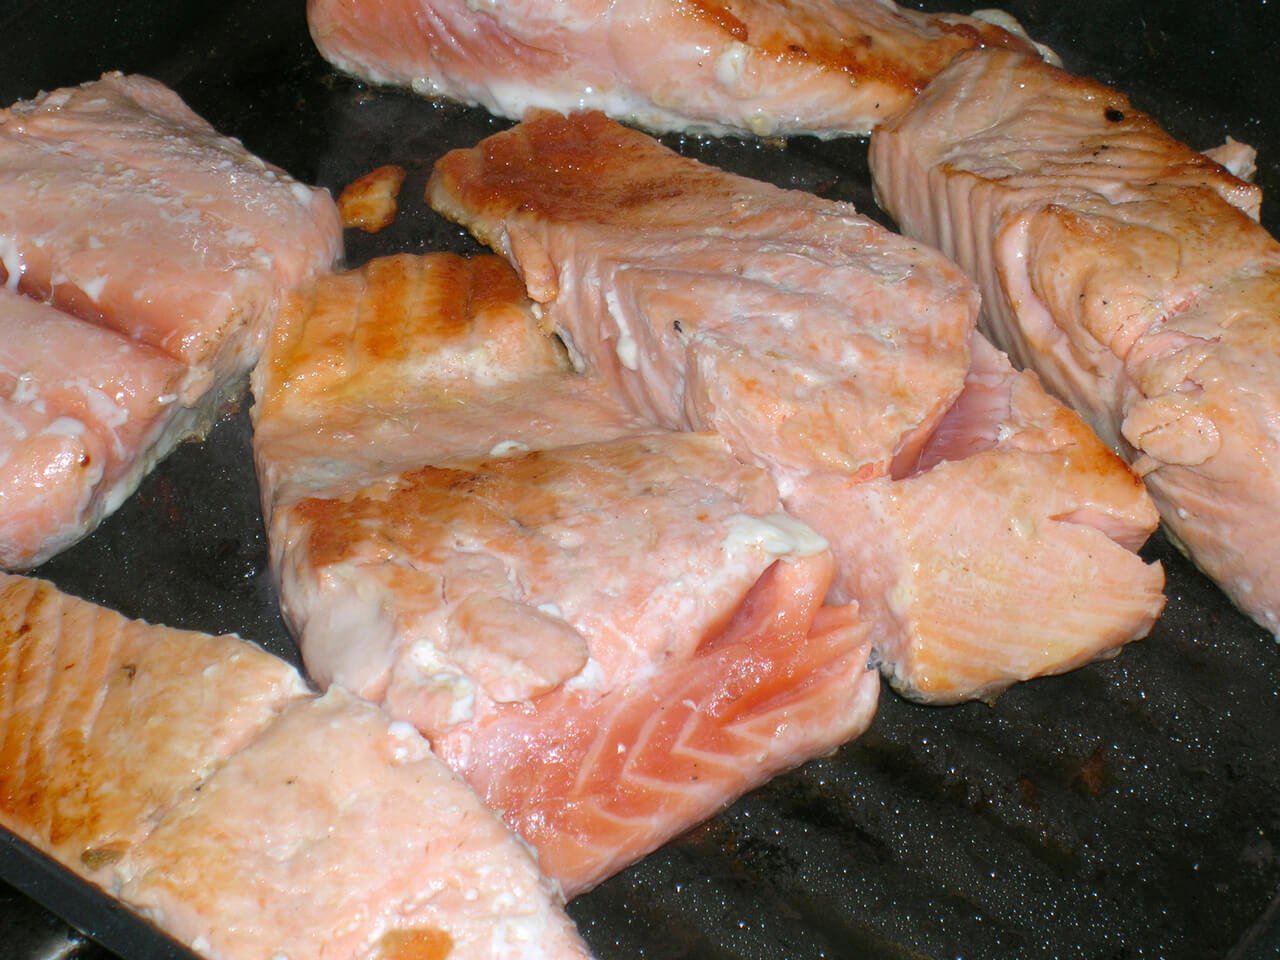 Salmon flesh baking on sheet with oozing white goo